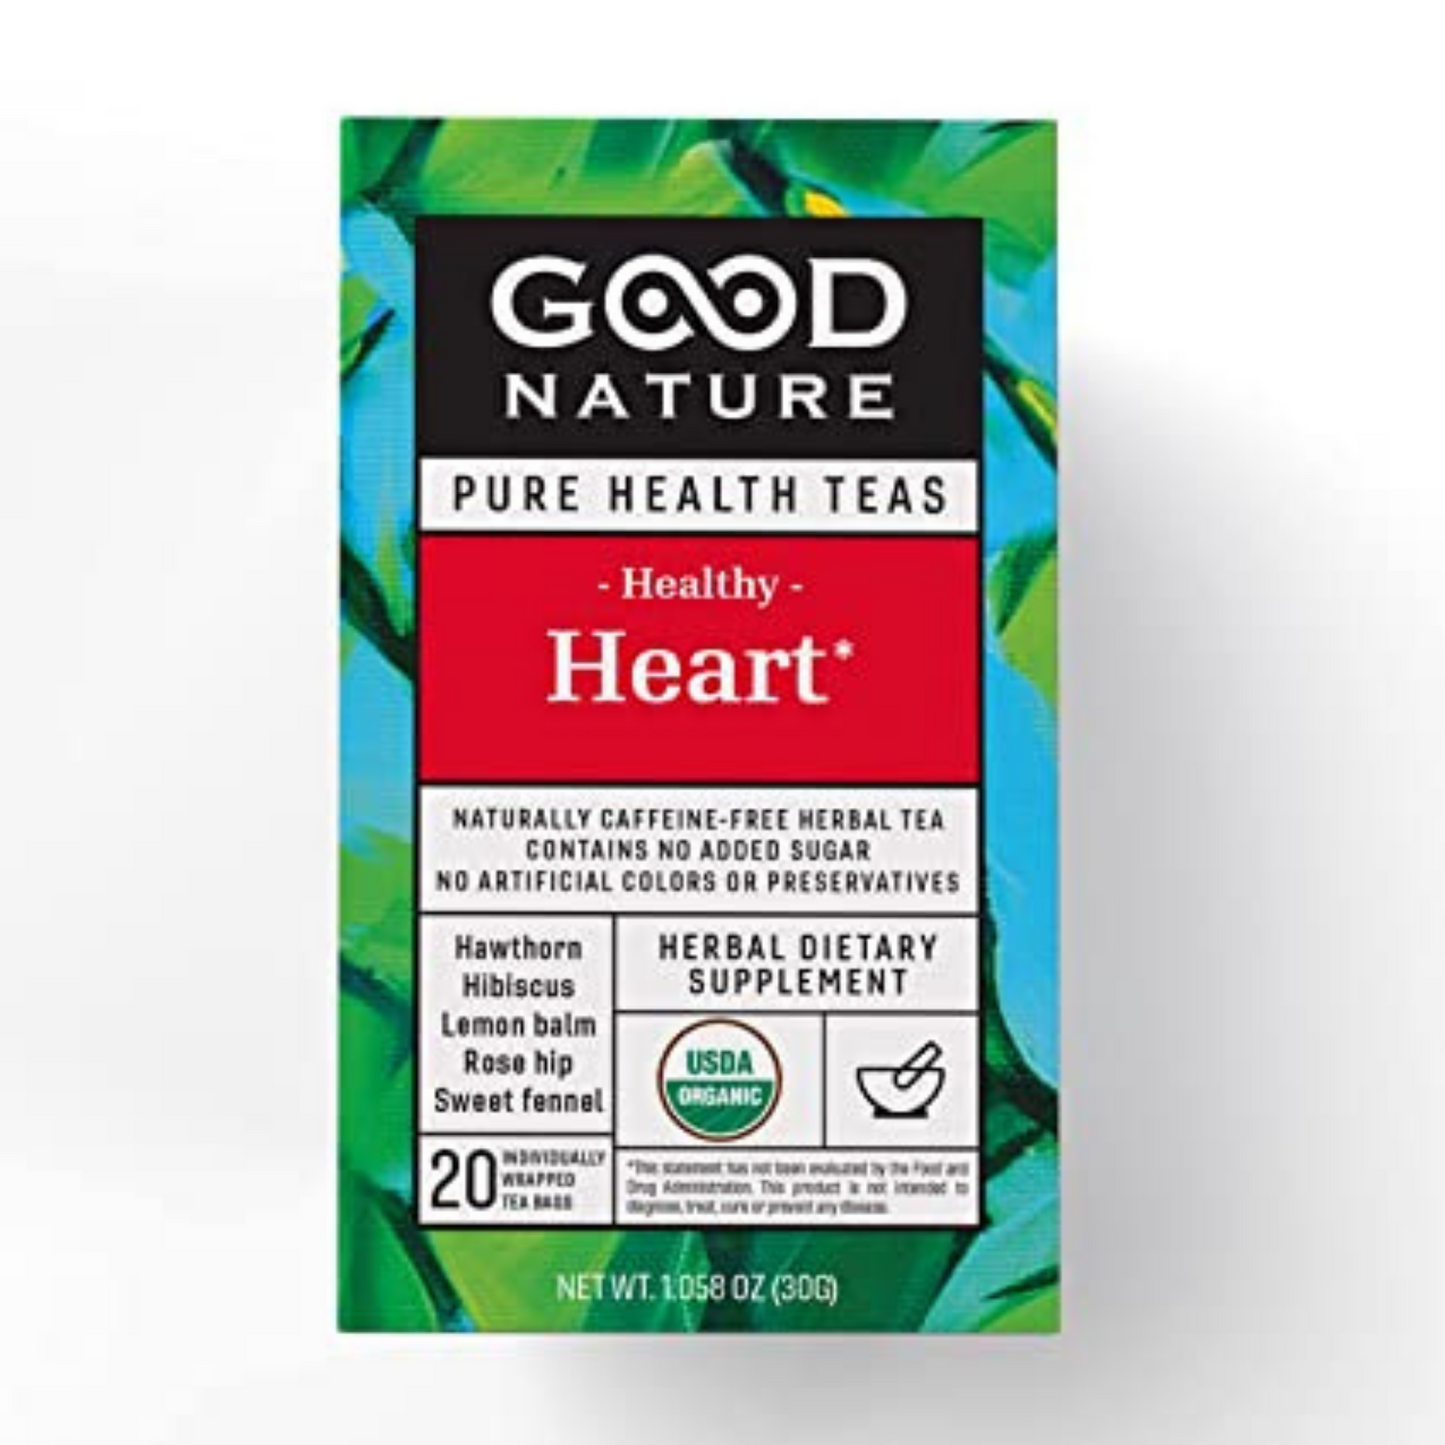 Good Nature Healthy Heart Tea Bags (20 count) #10084558